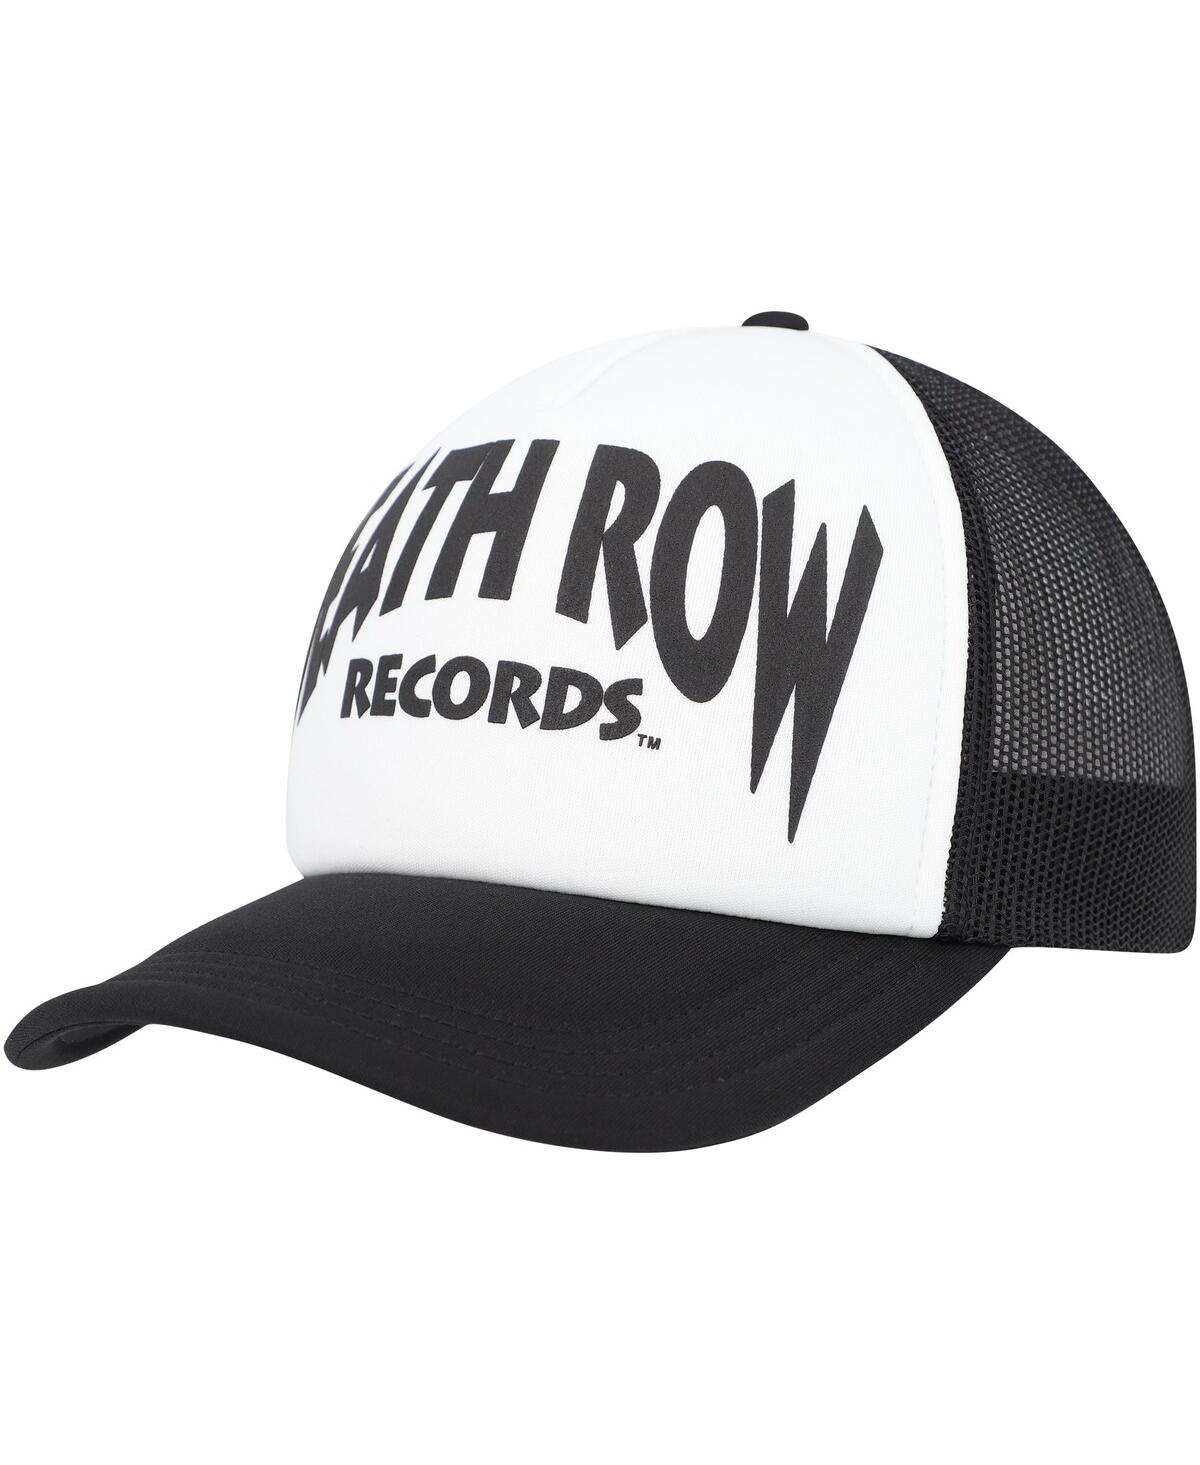 Men's White, Black Death Row Records Trucker Adjustable Hat - White, Black